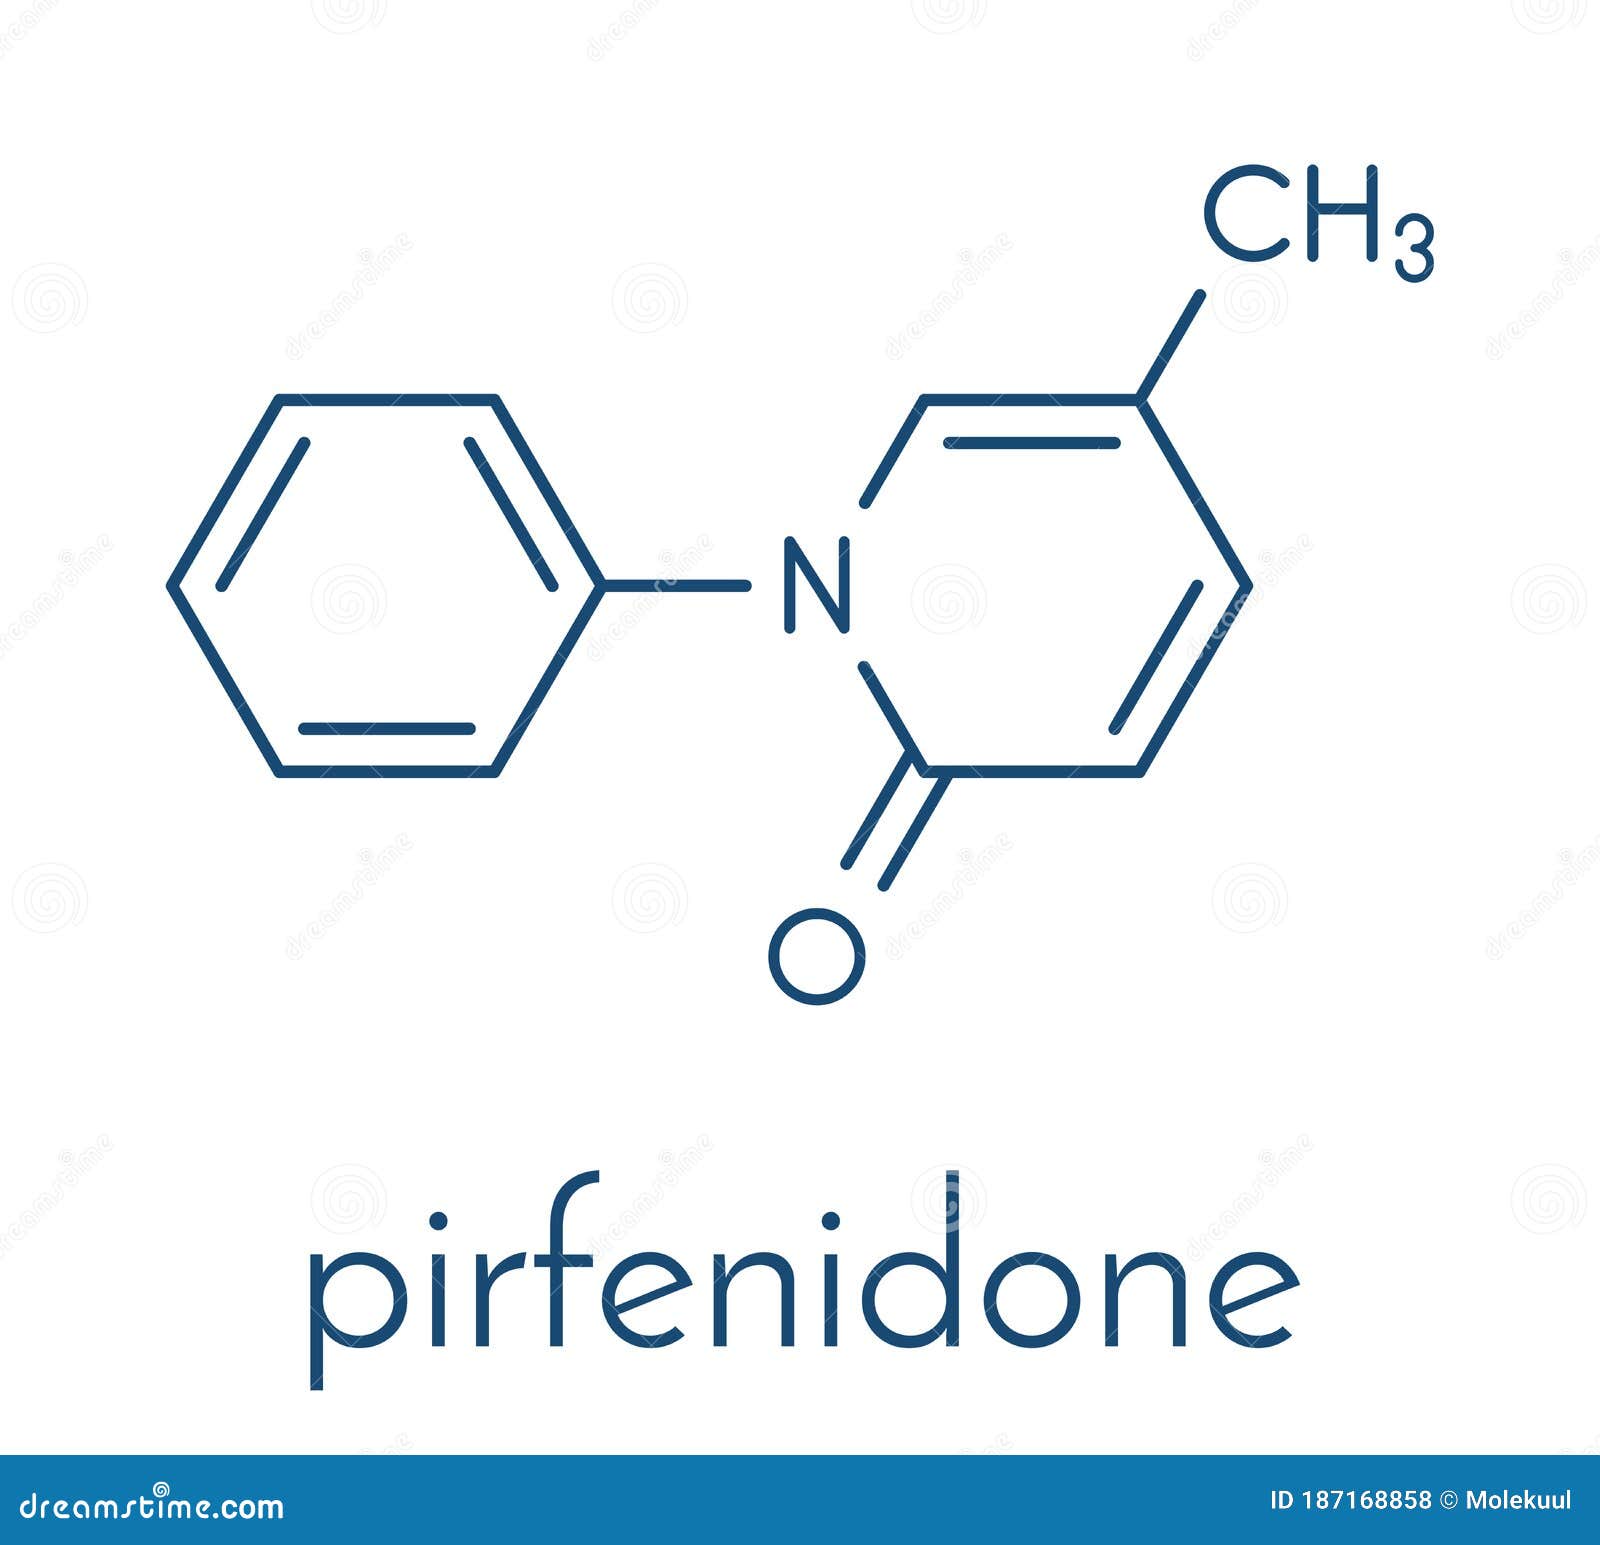 pirfenidone idiopathic pulmonary fibrosis ipf drug molecule. ipf is a rare lung disease. skeletal formula.